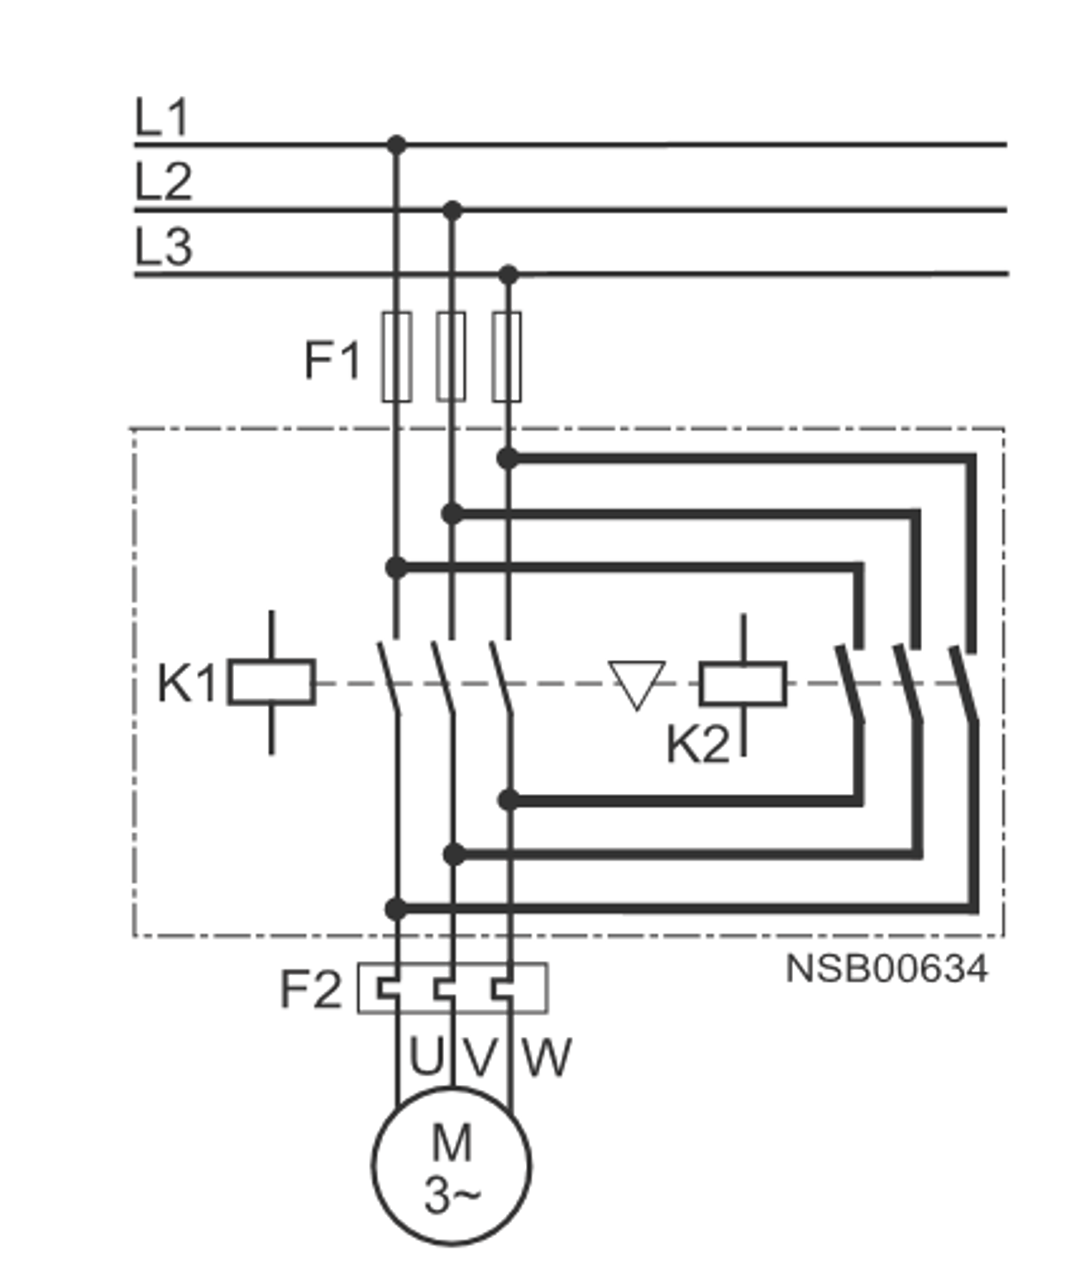 Siemens 3RA2325-8XB30-1BF4 wiring diagram